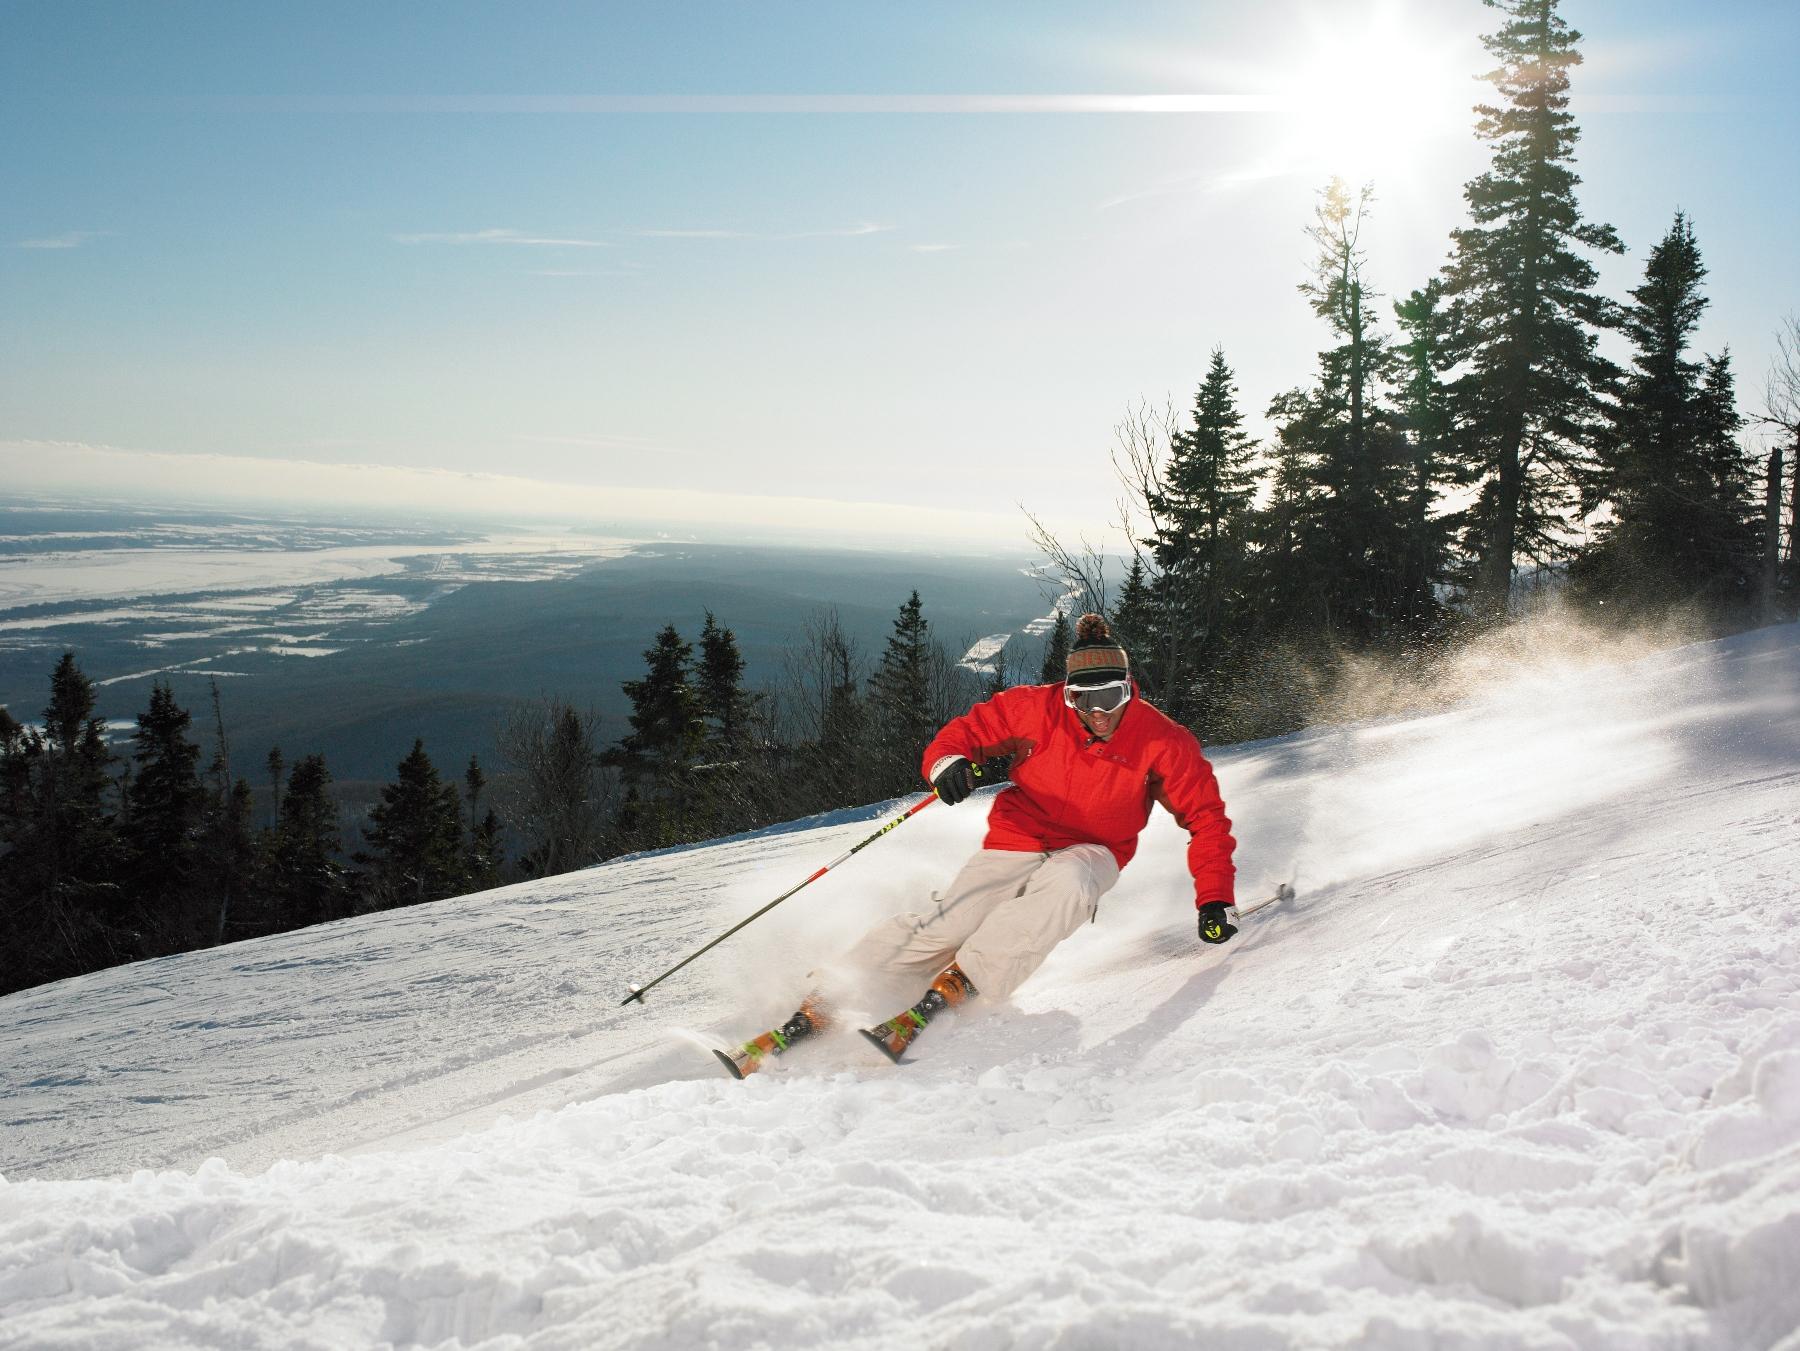 Mont-Sainte-Anne Ski Resort